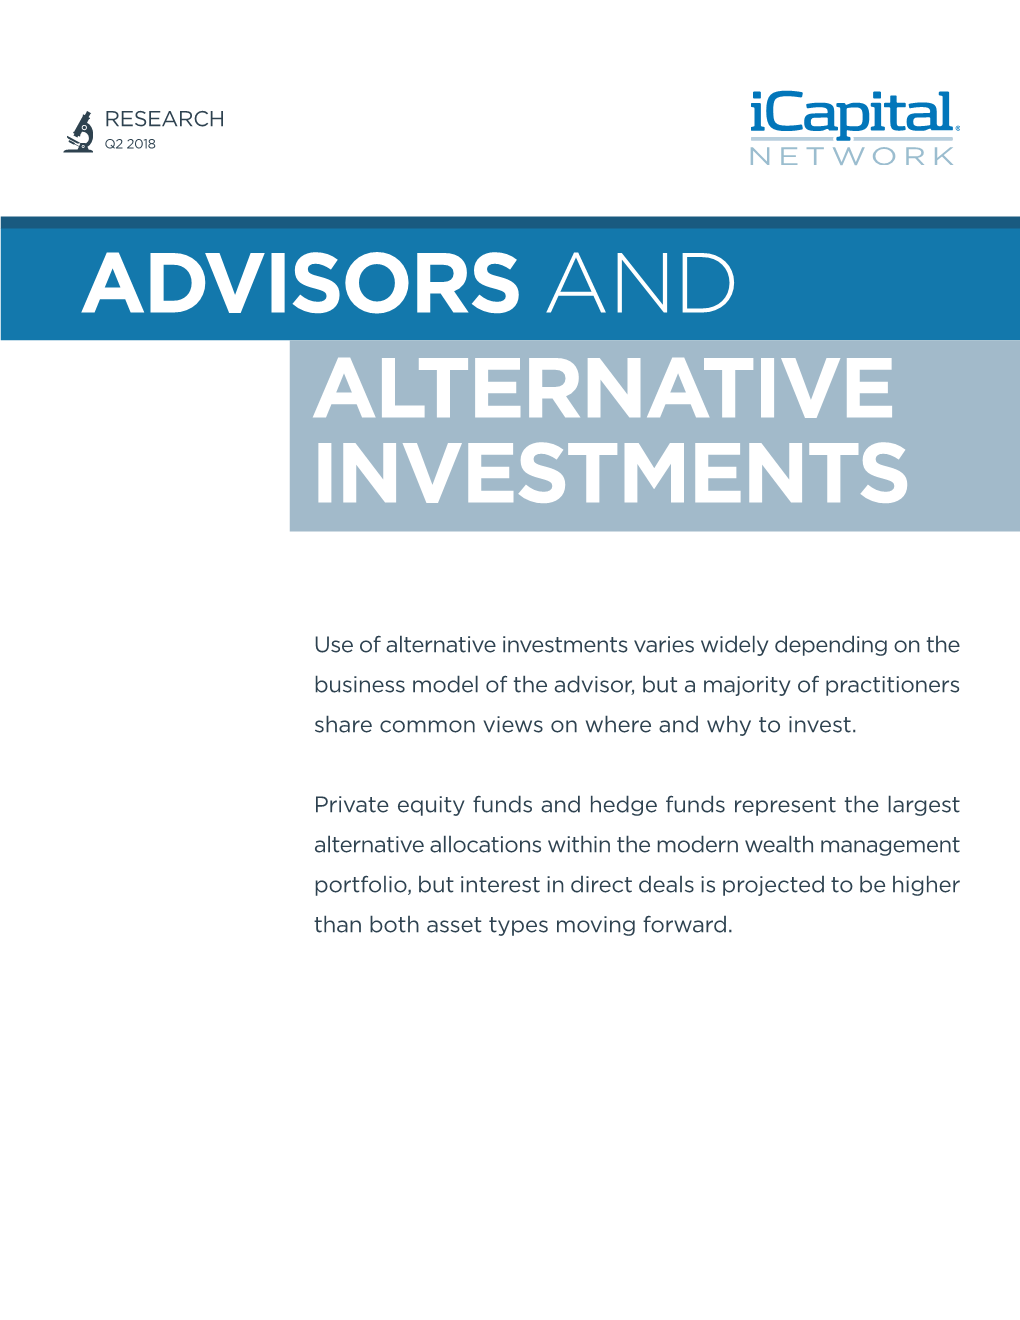 Advisors and Alternative Investments